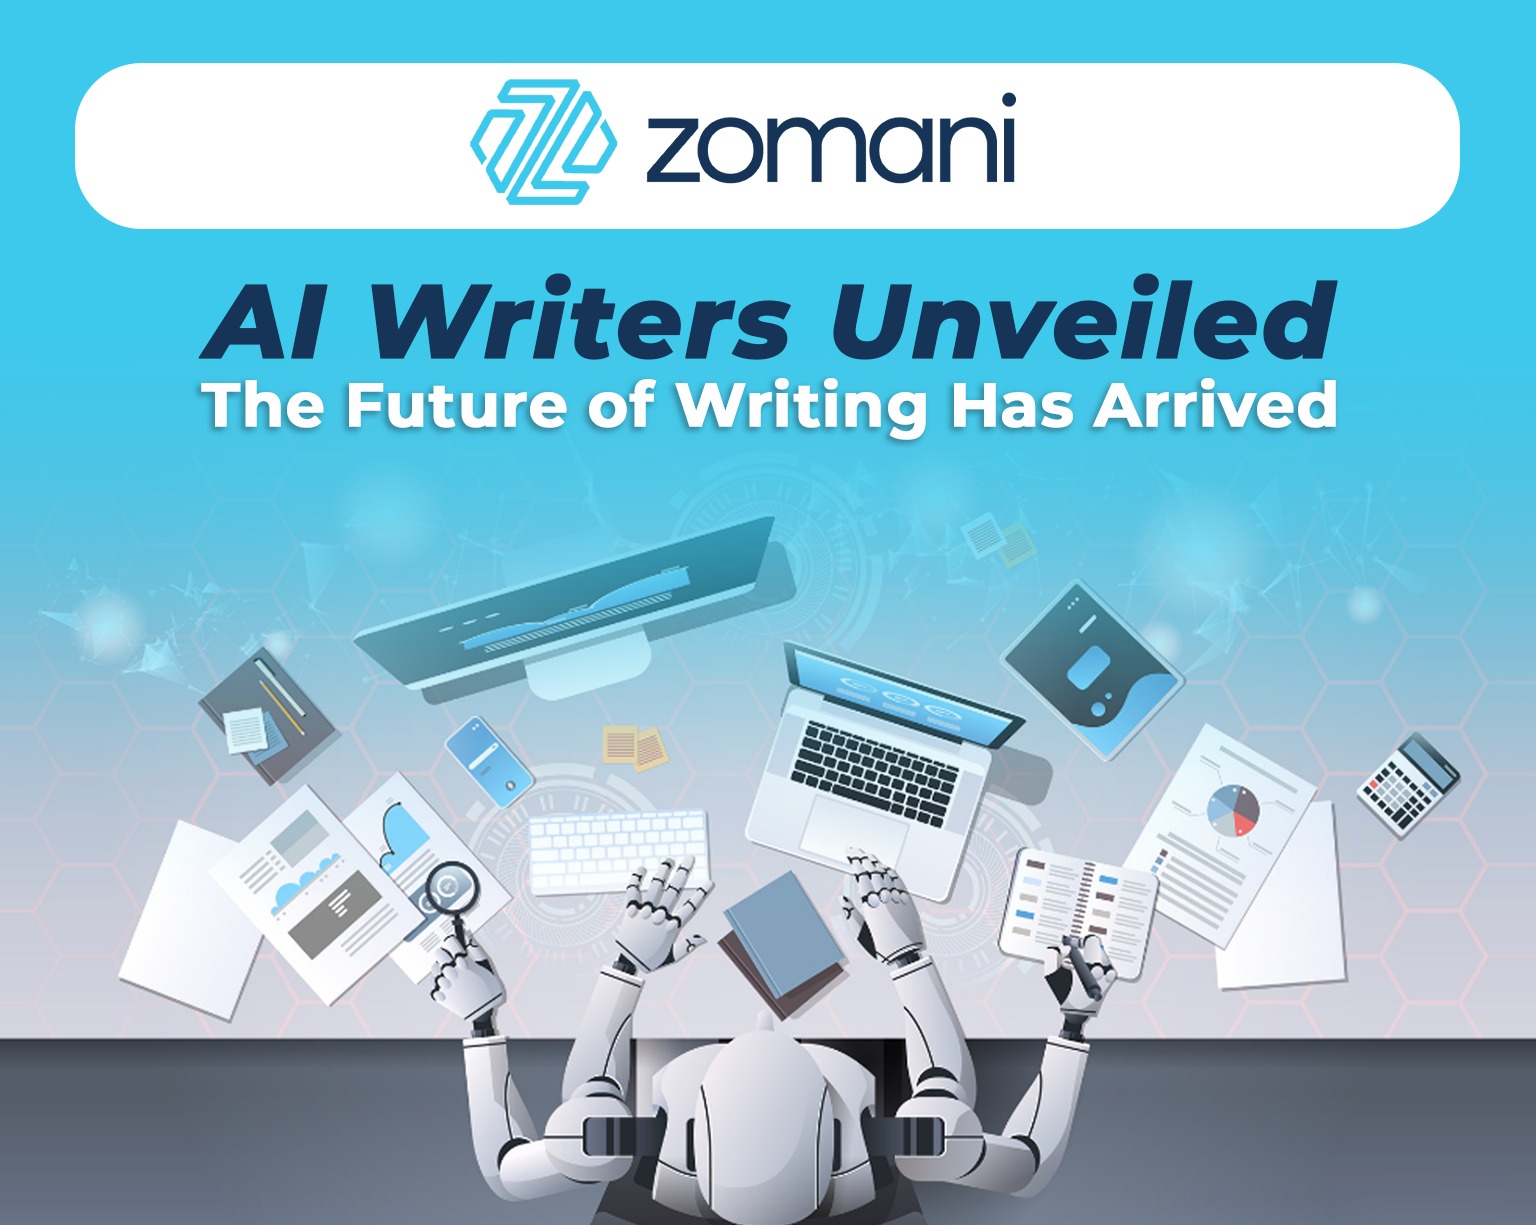 Zomani; the AI writer from the future